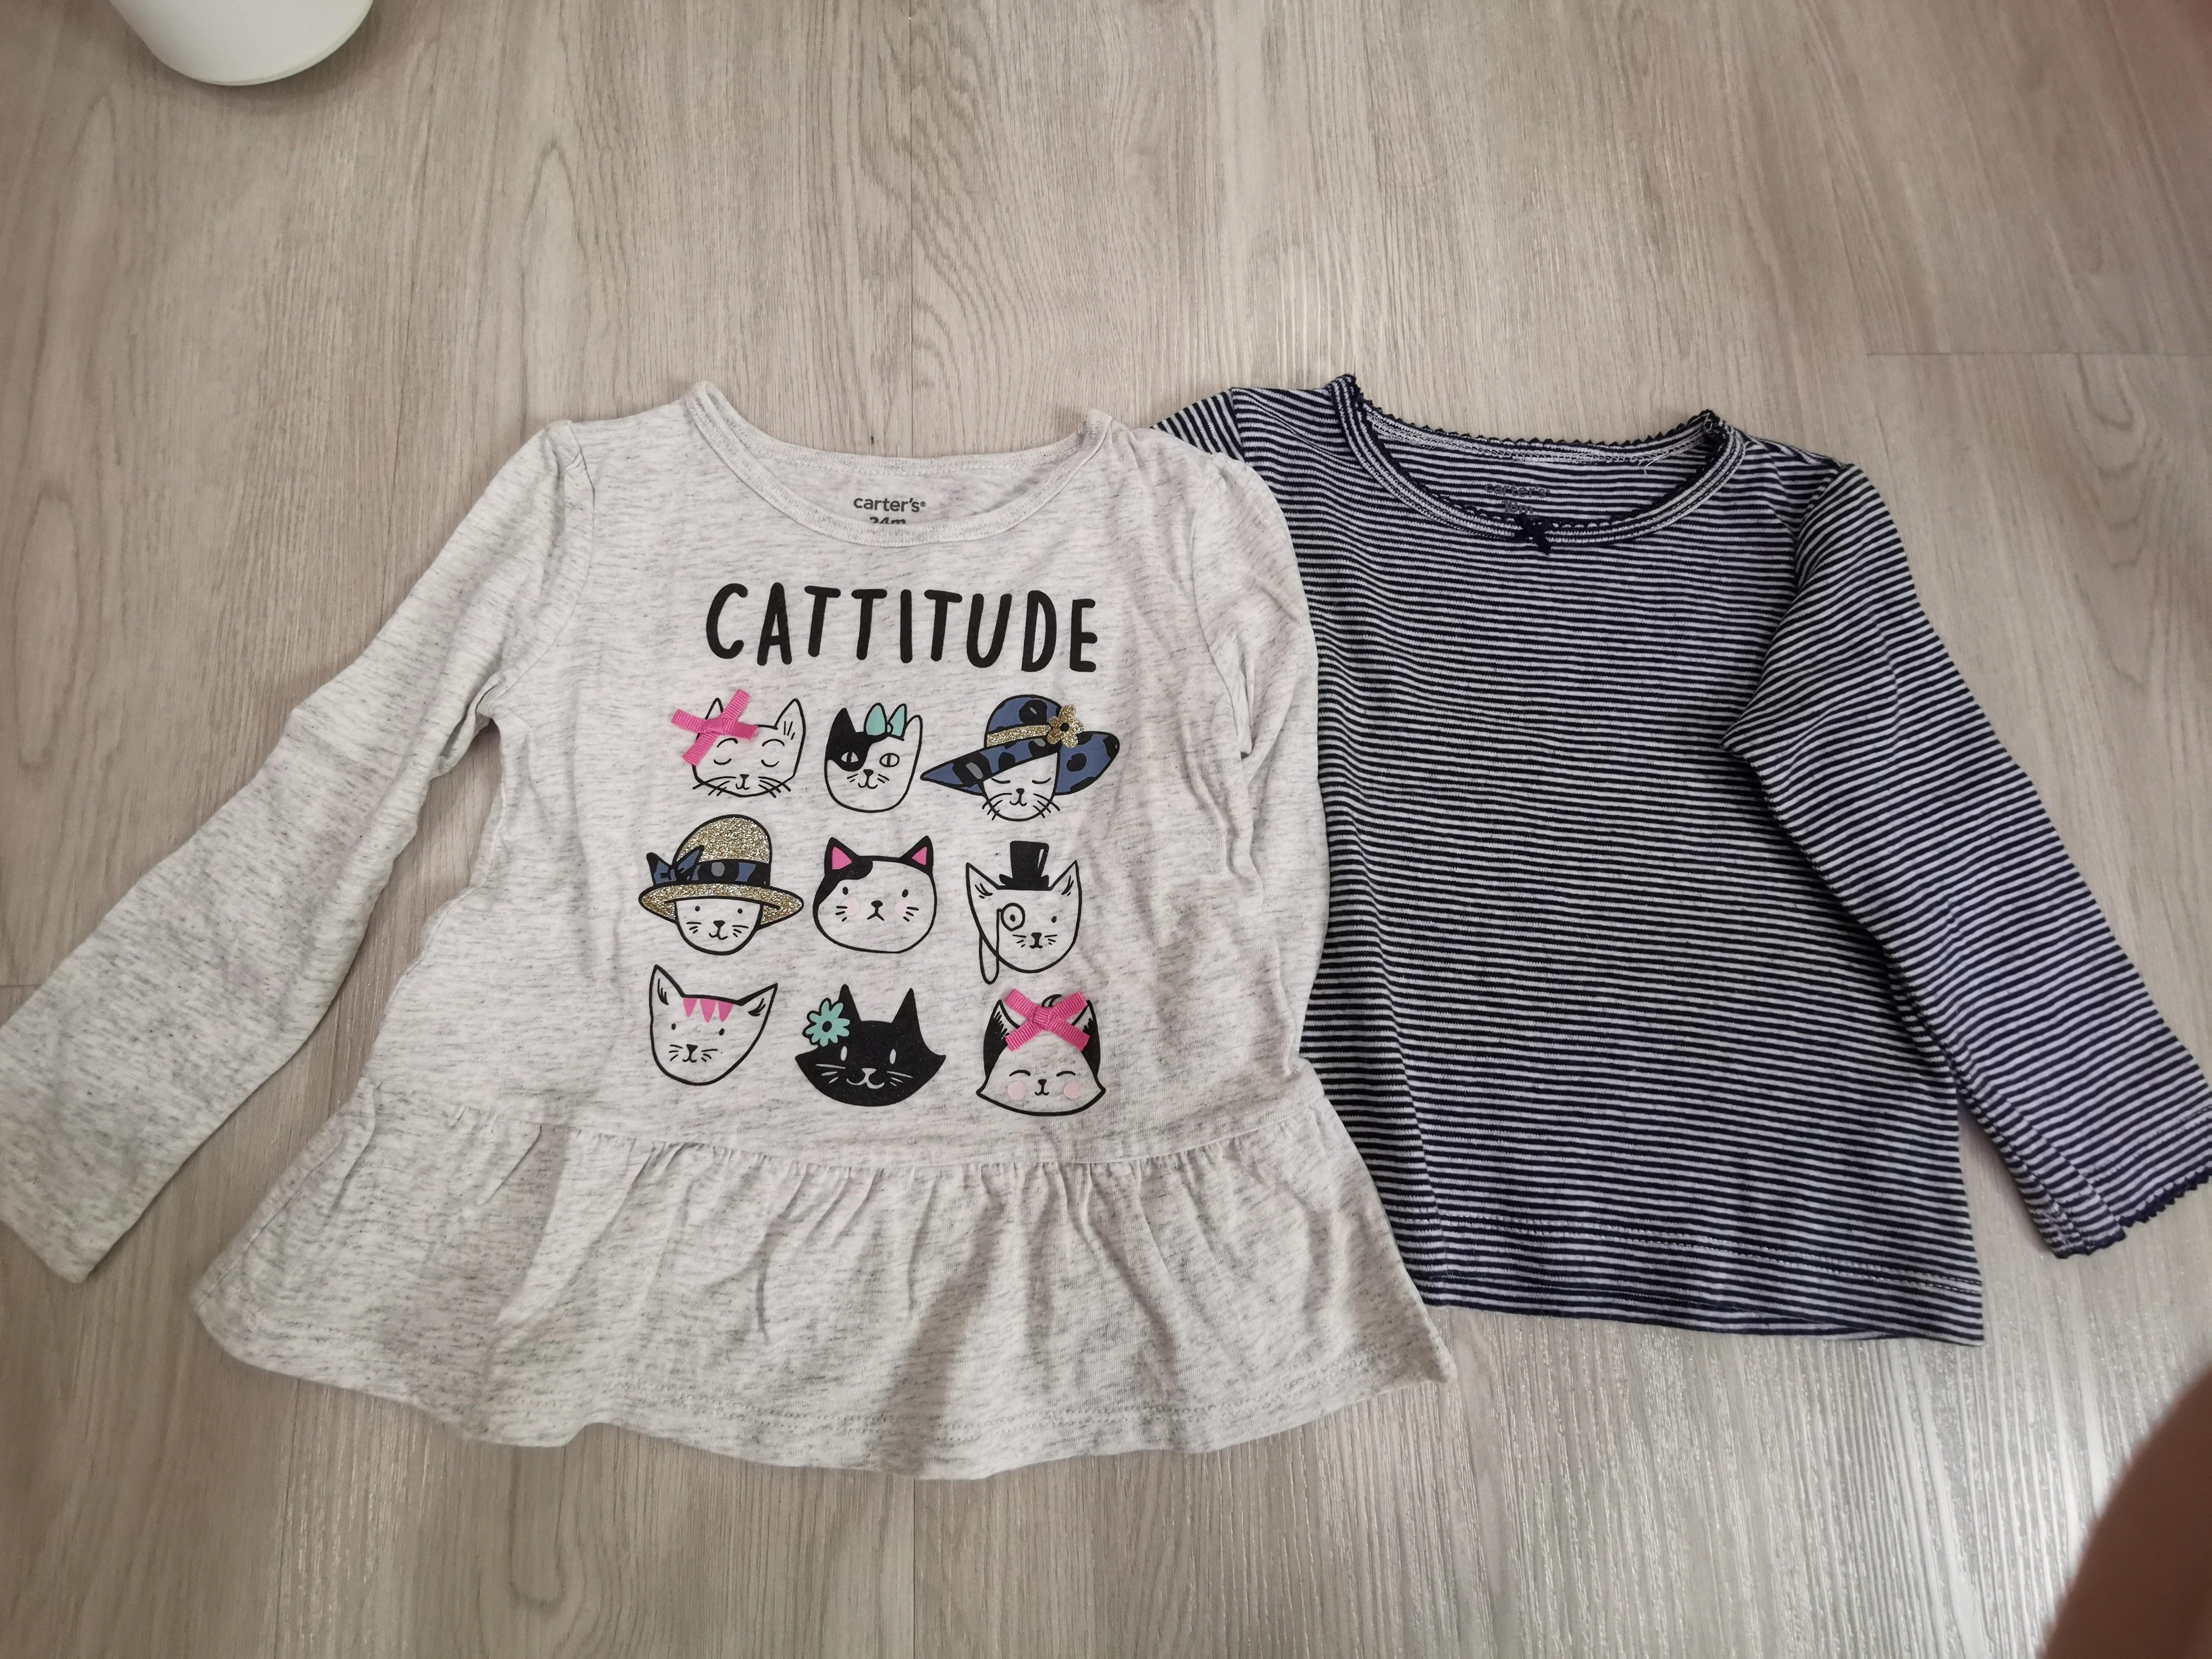 carters cattitude shirt